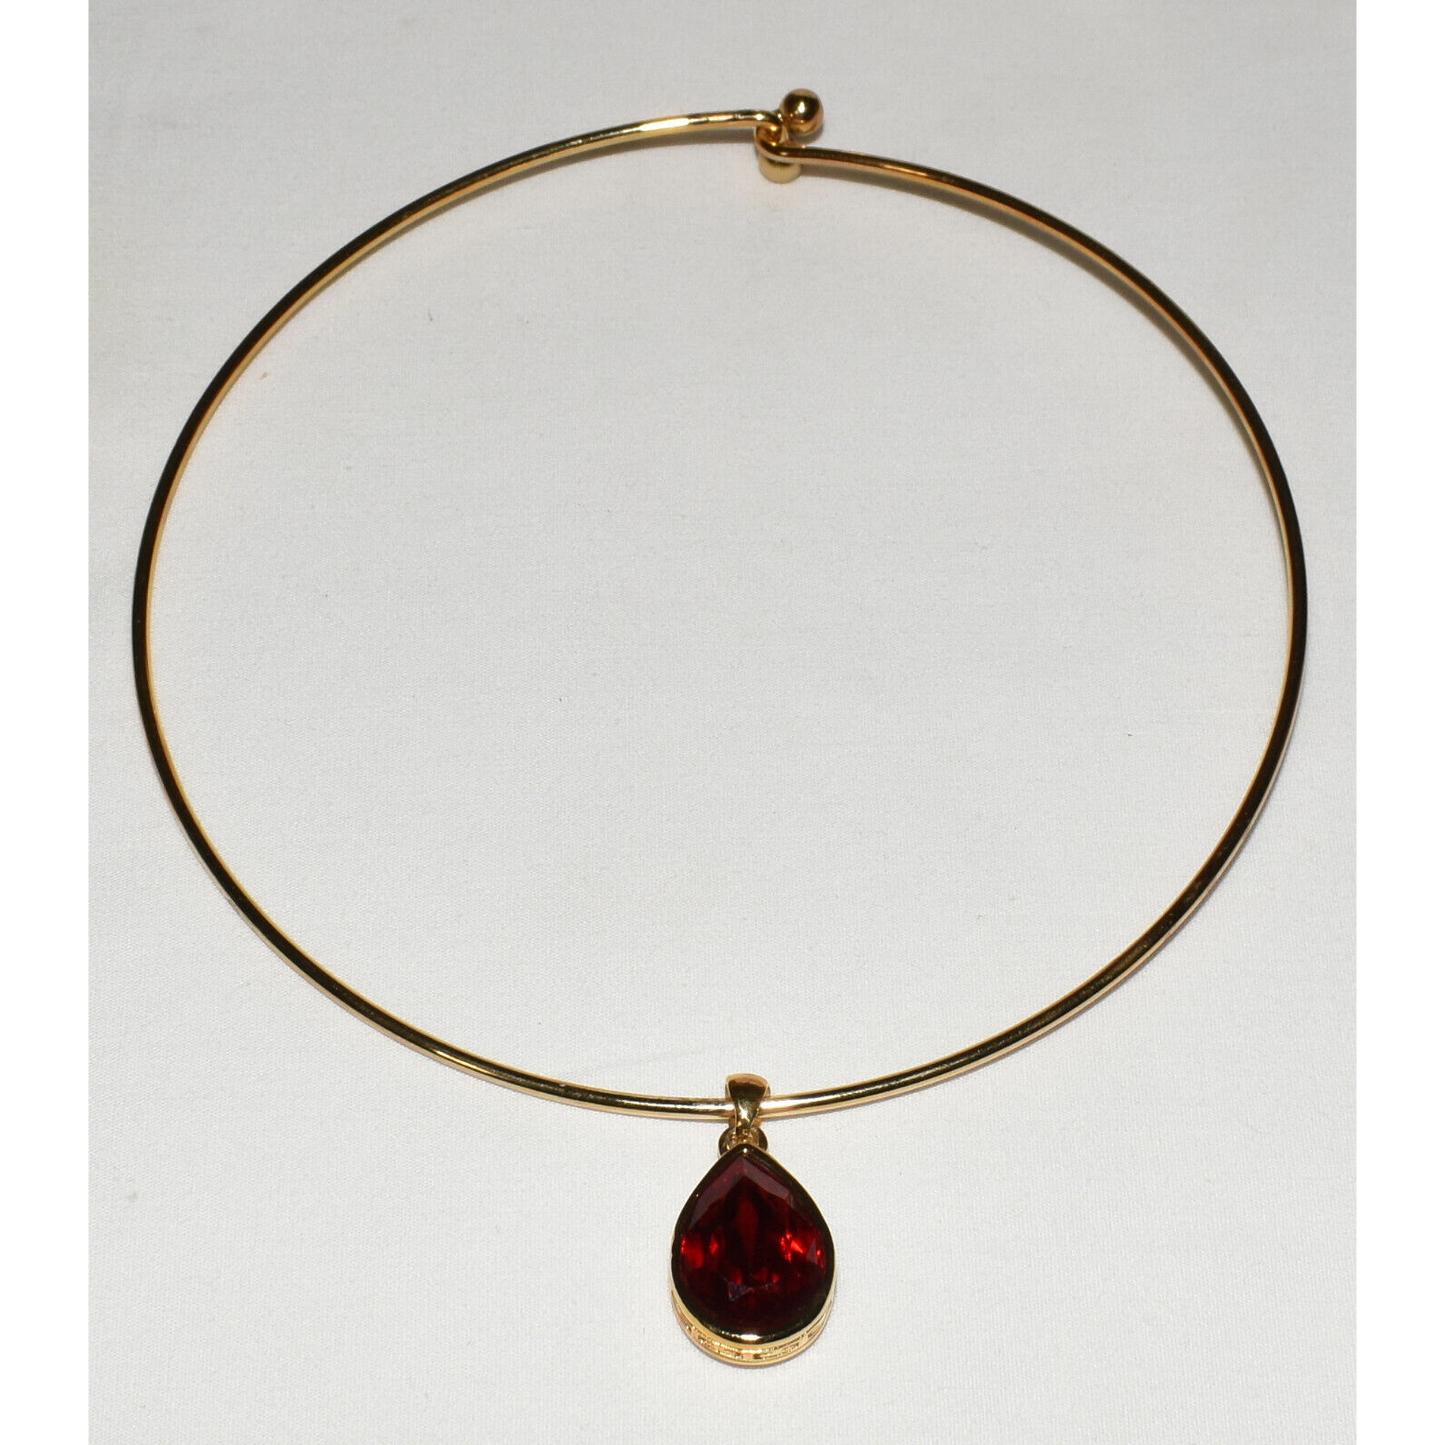 Vintage Givenchy Bijoux Paris Gold Collar Necklace w Red Teardrop Stone / Pendant